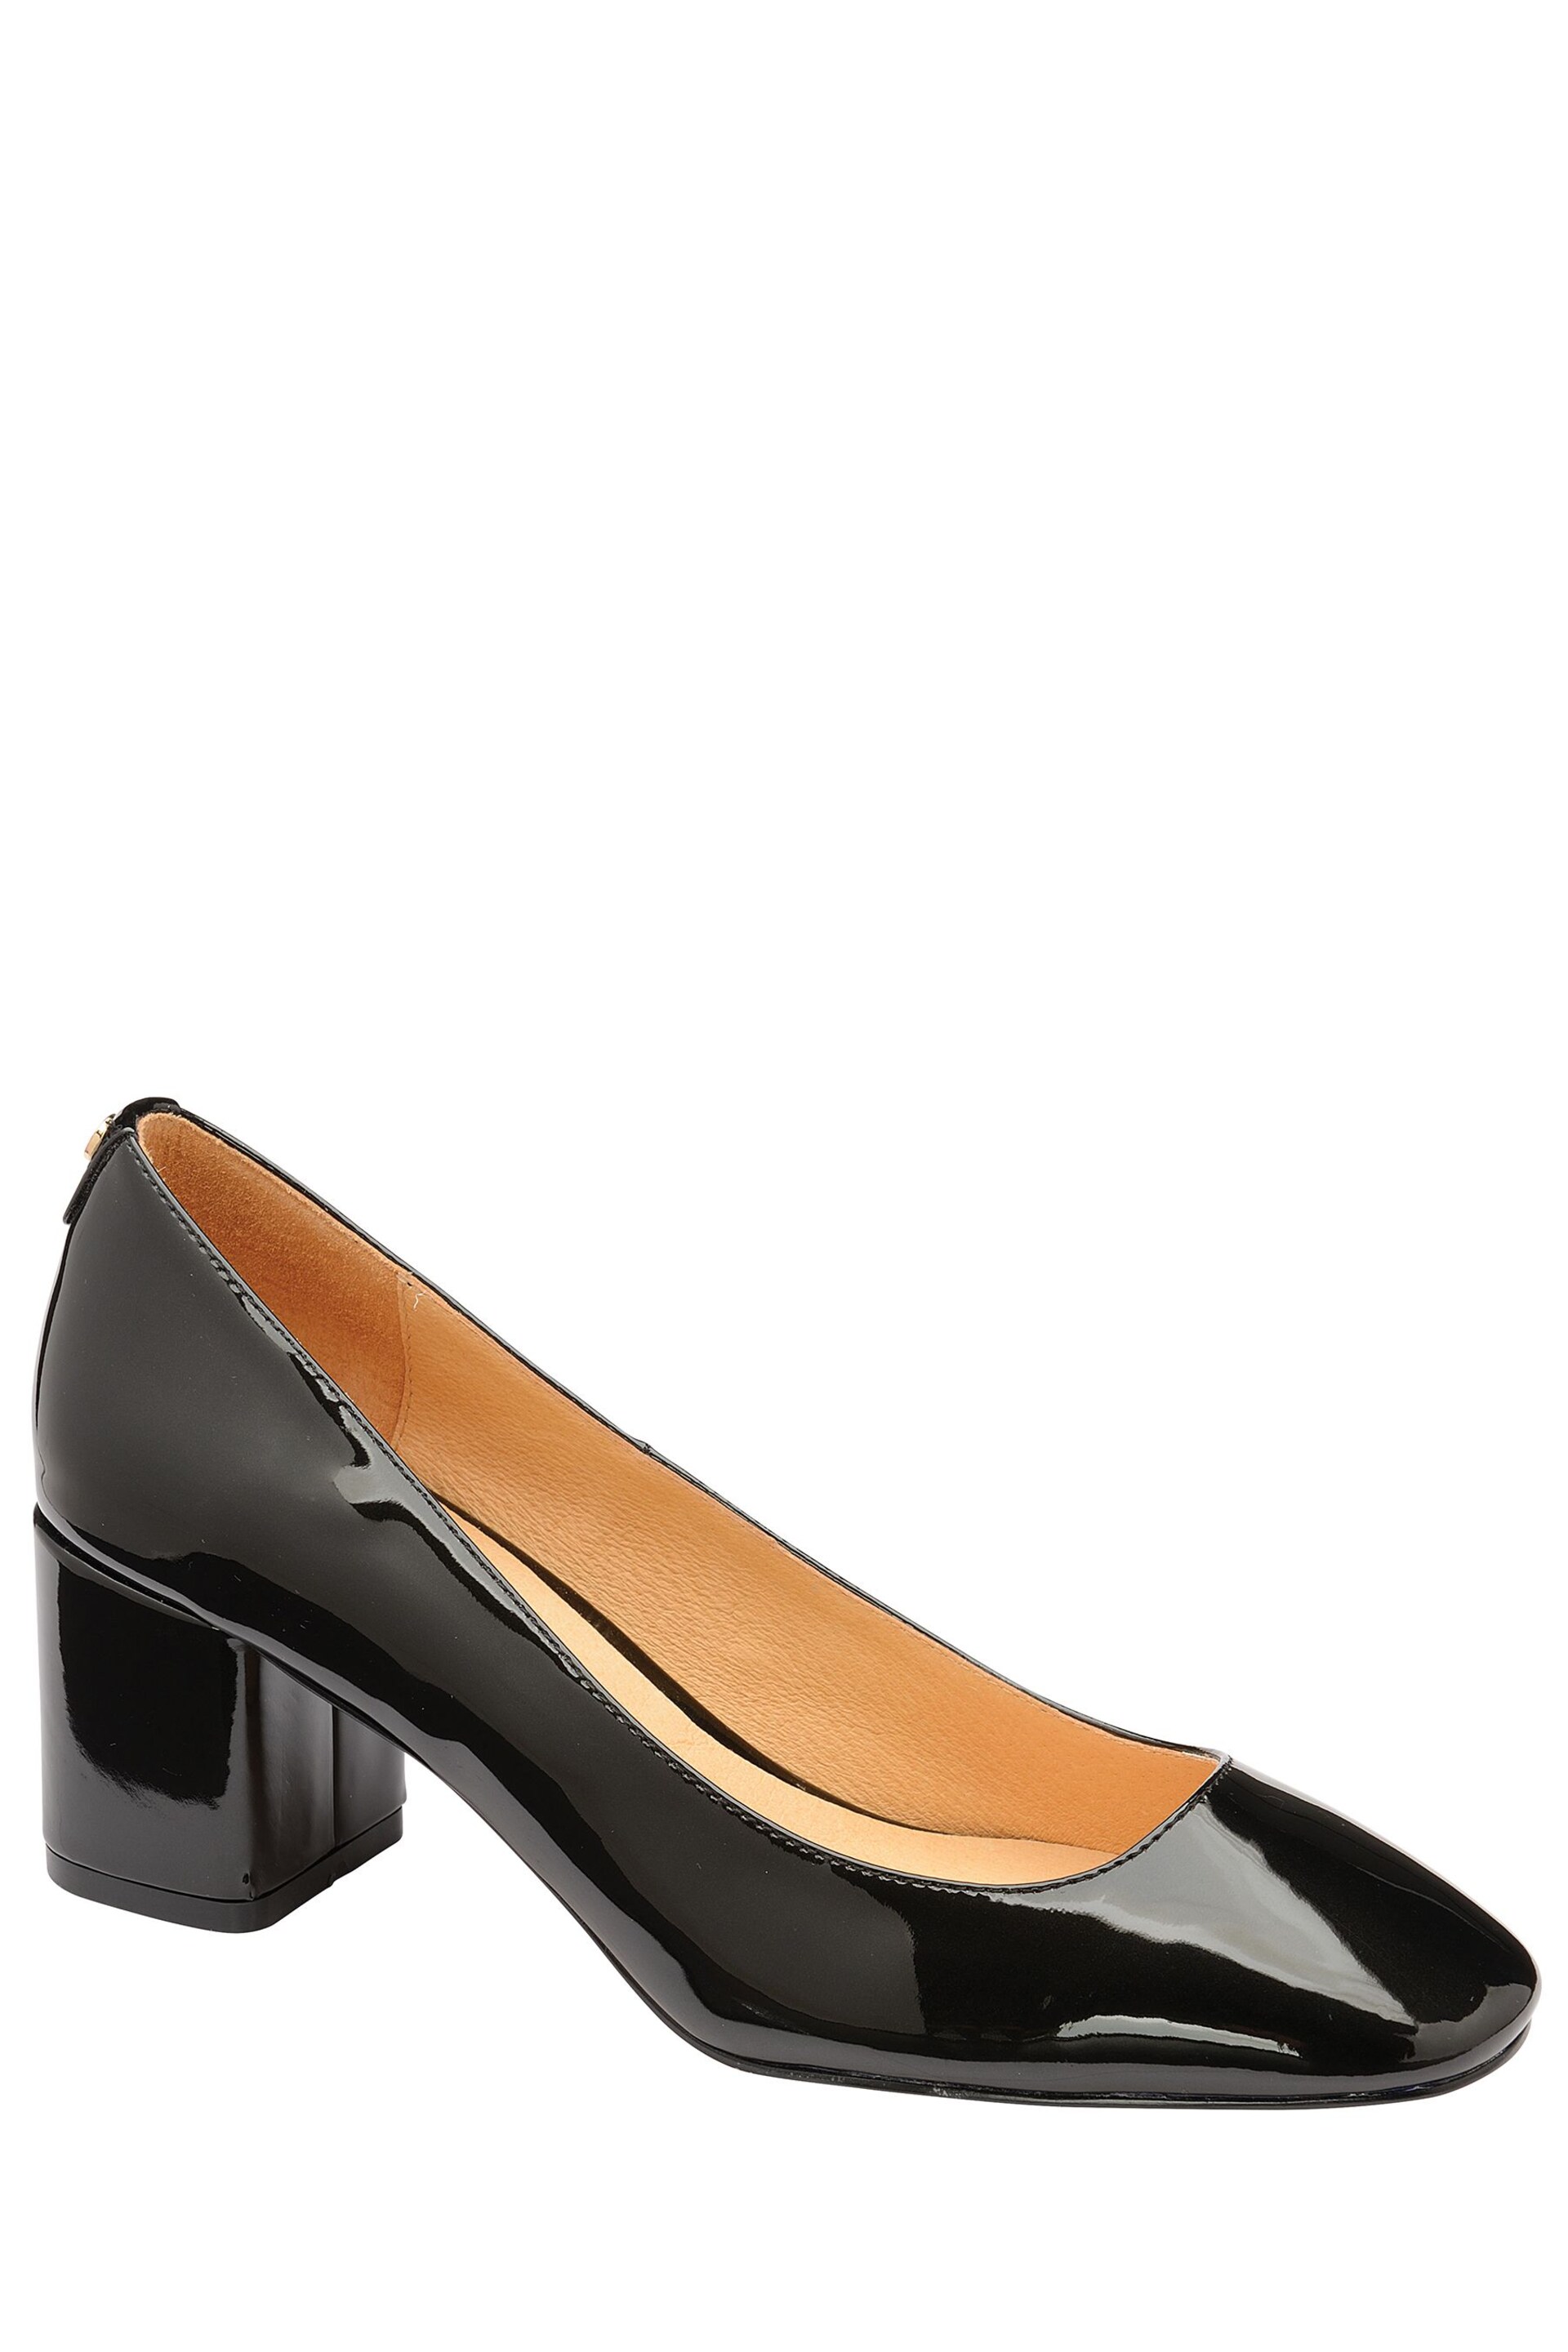 Ravel Black Patent Block Heel Shoes - Image 1 of 4